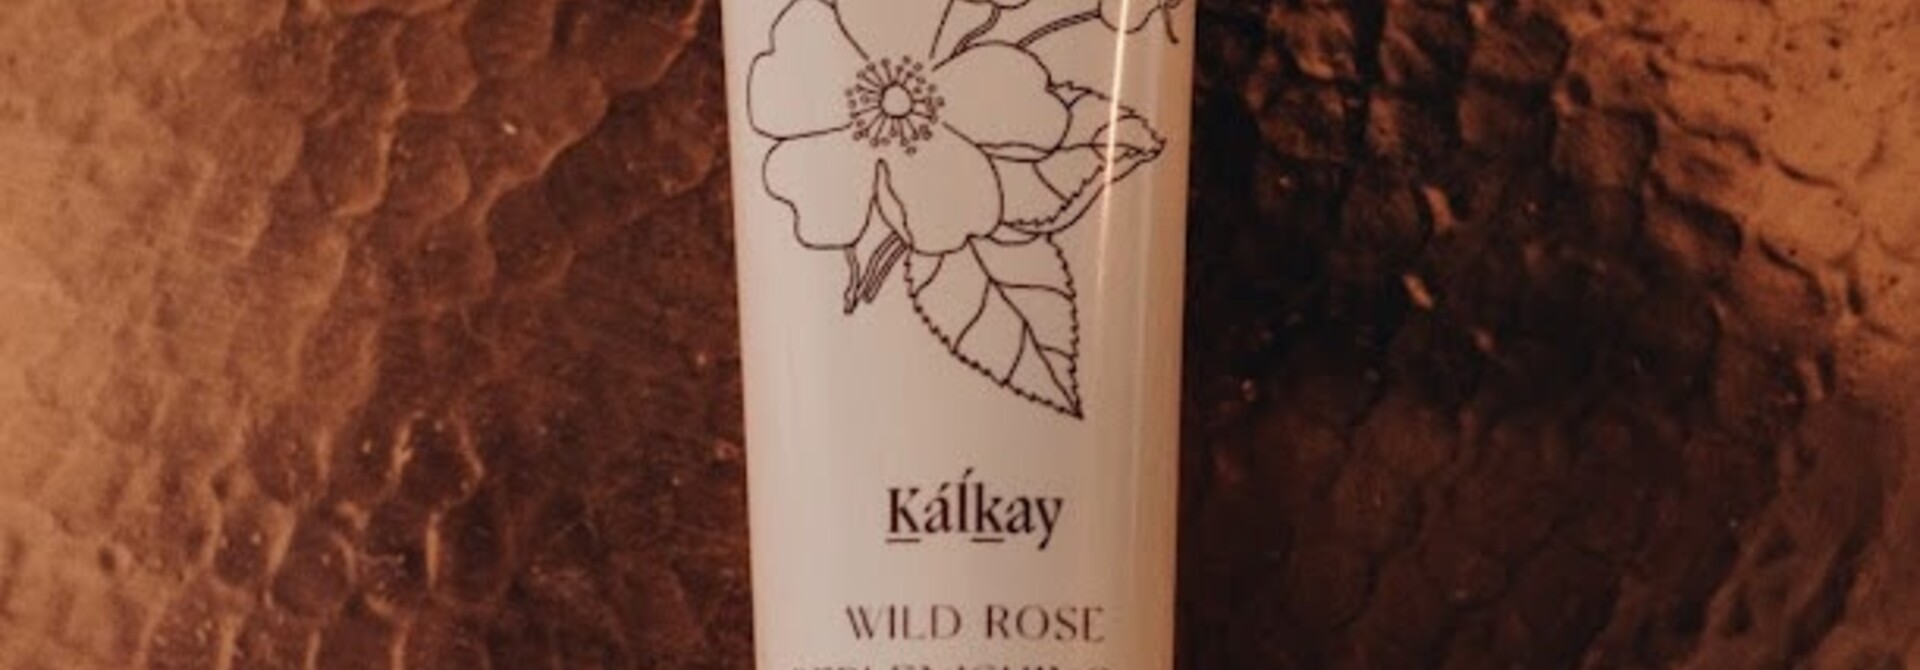 Kalkay Wild Rose Replenishing Mask by Sḵwálwen Botanicals